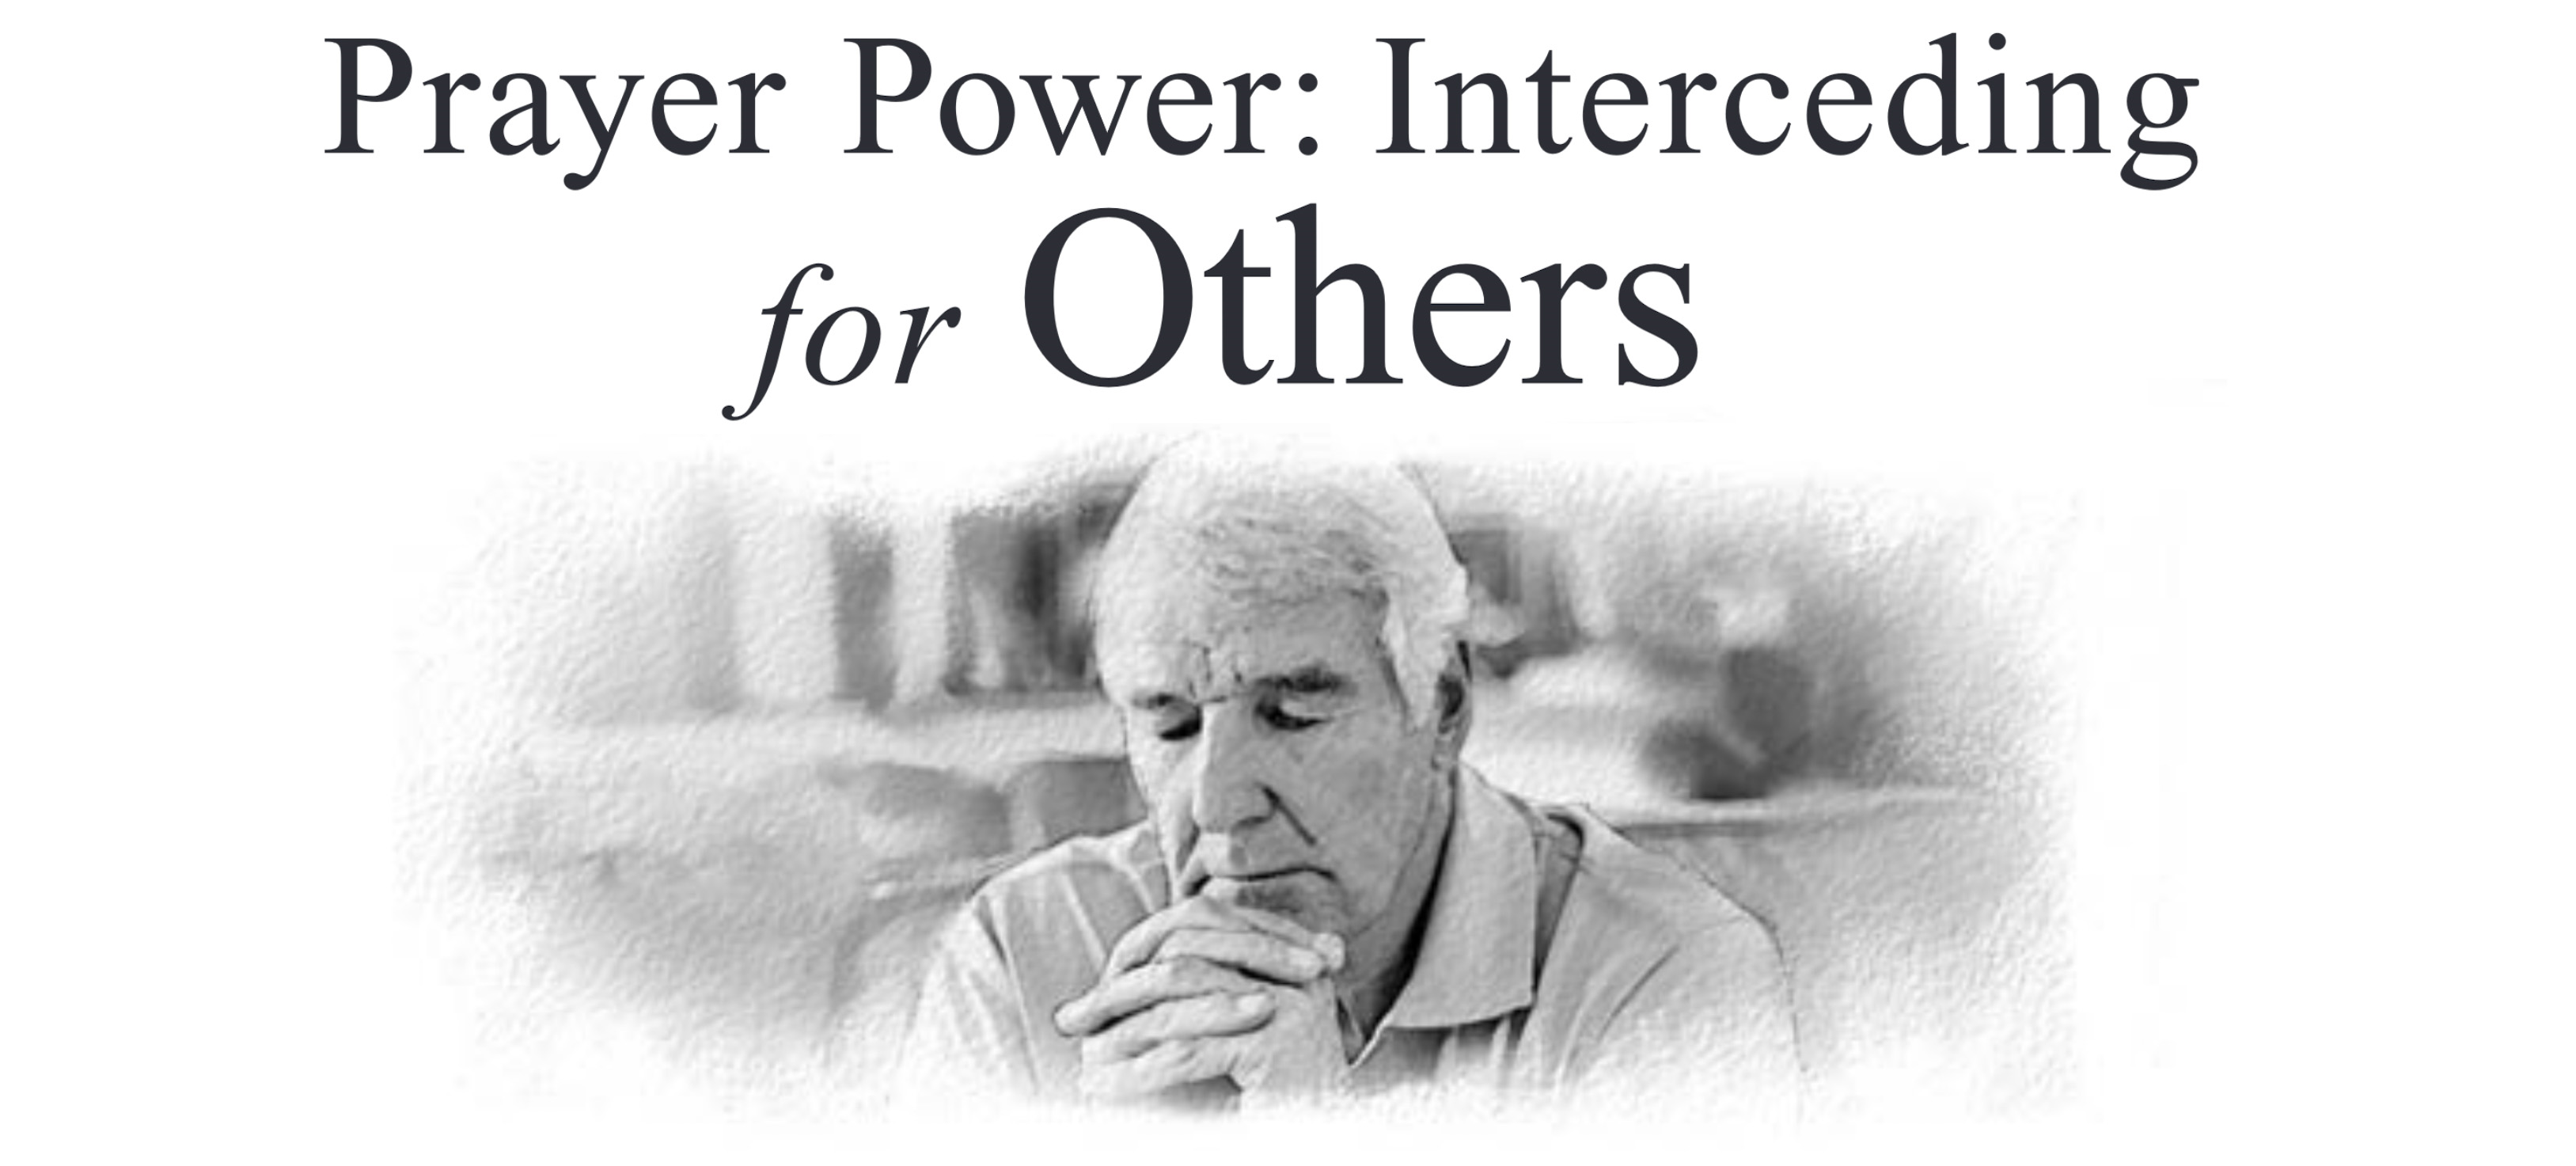 Prayer Power: Interceding for Others